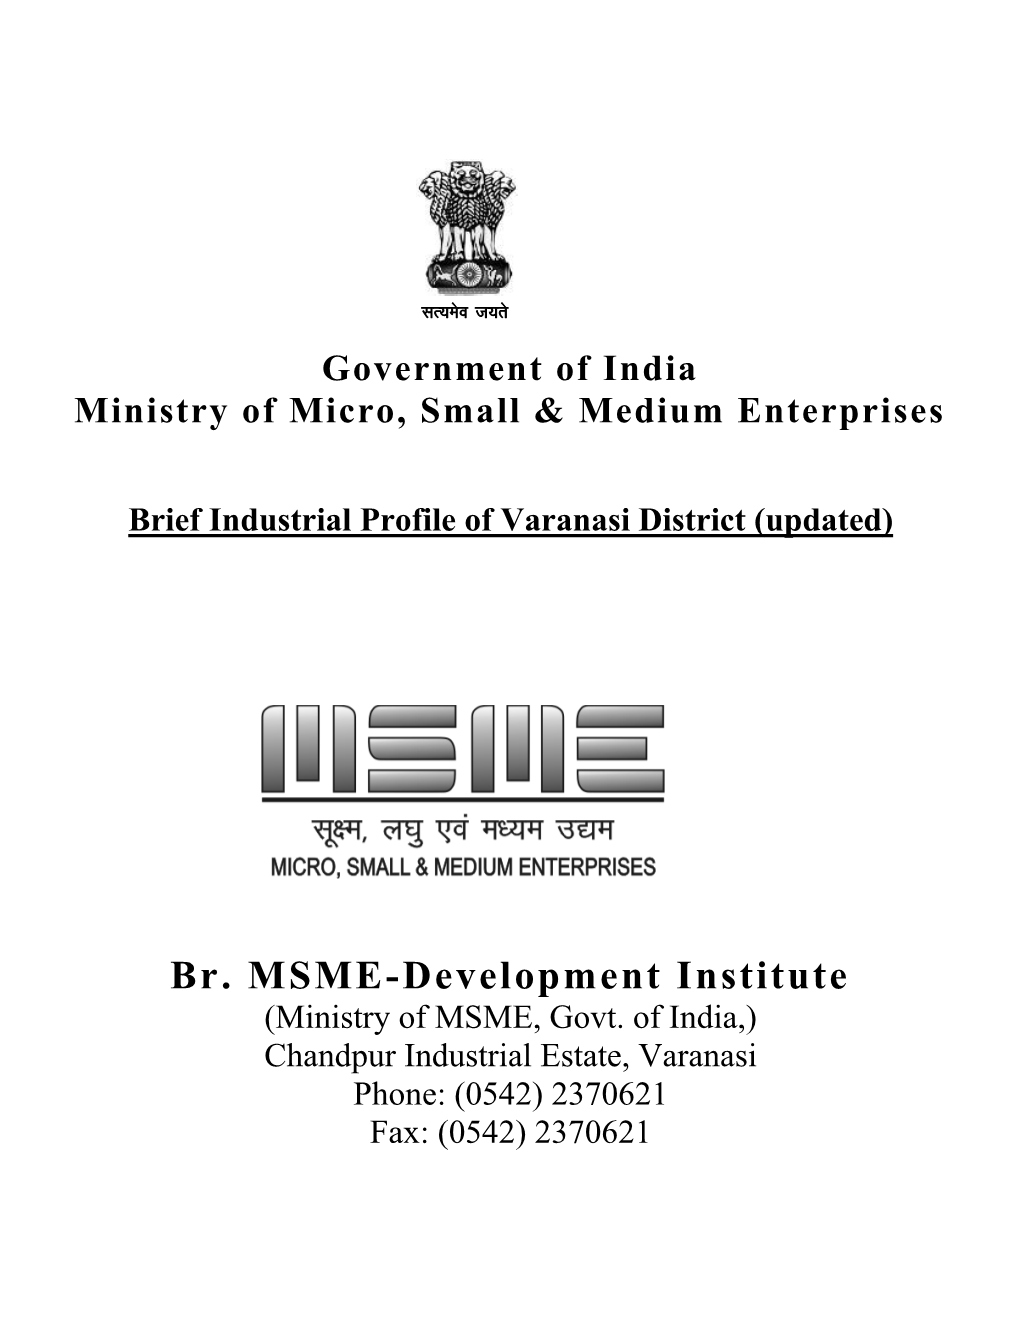 Br. MSME-Development Institute (Ministry of MSME, Govt